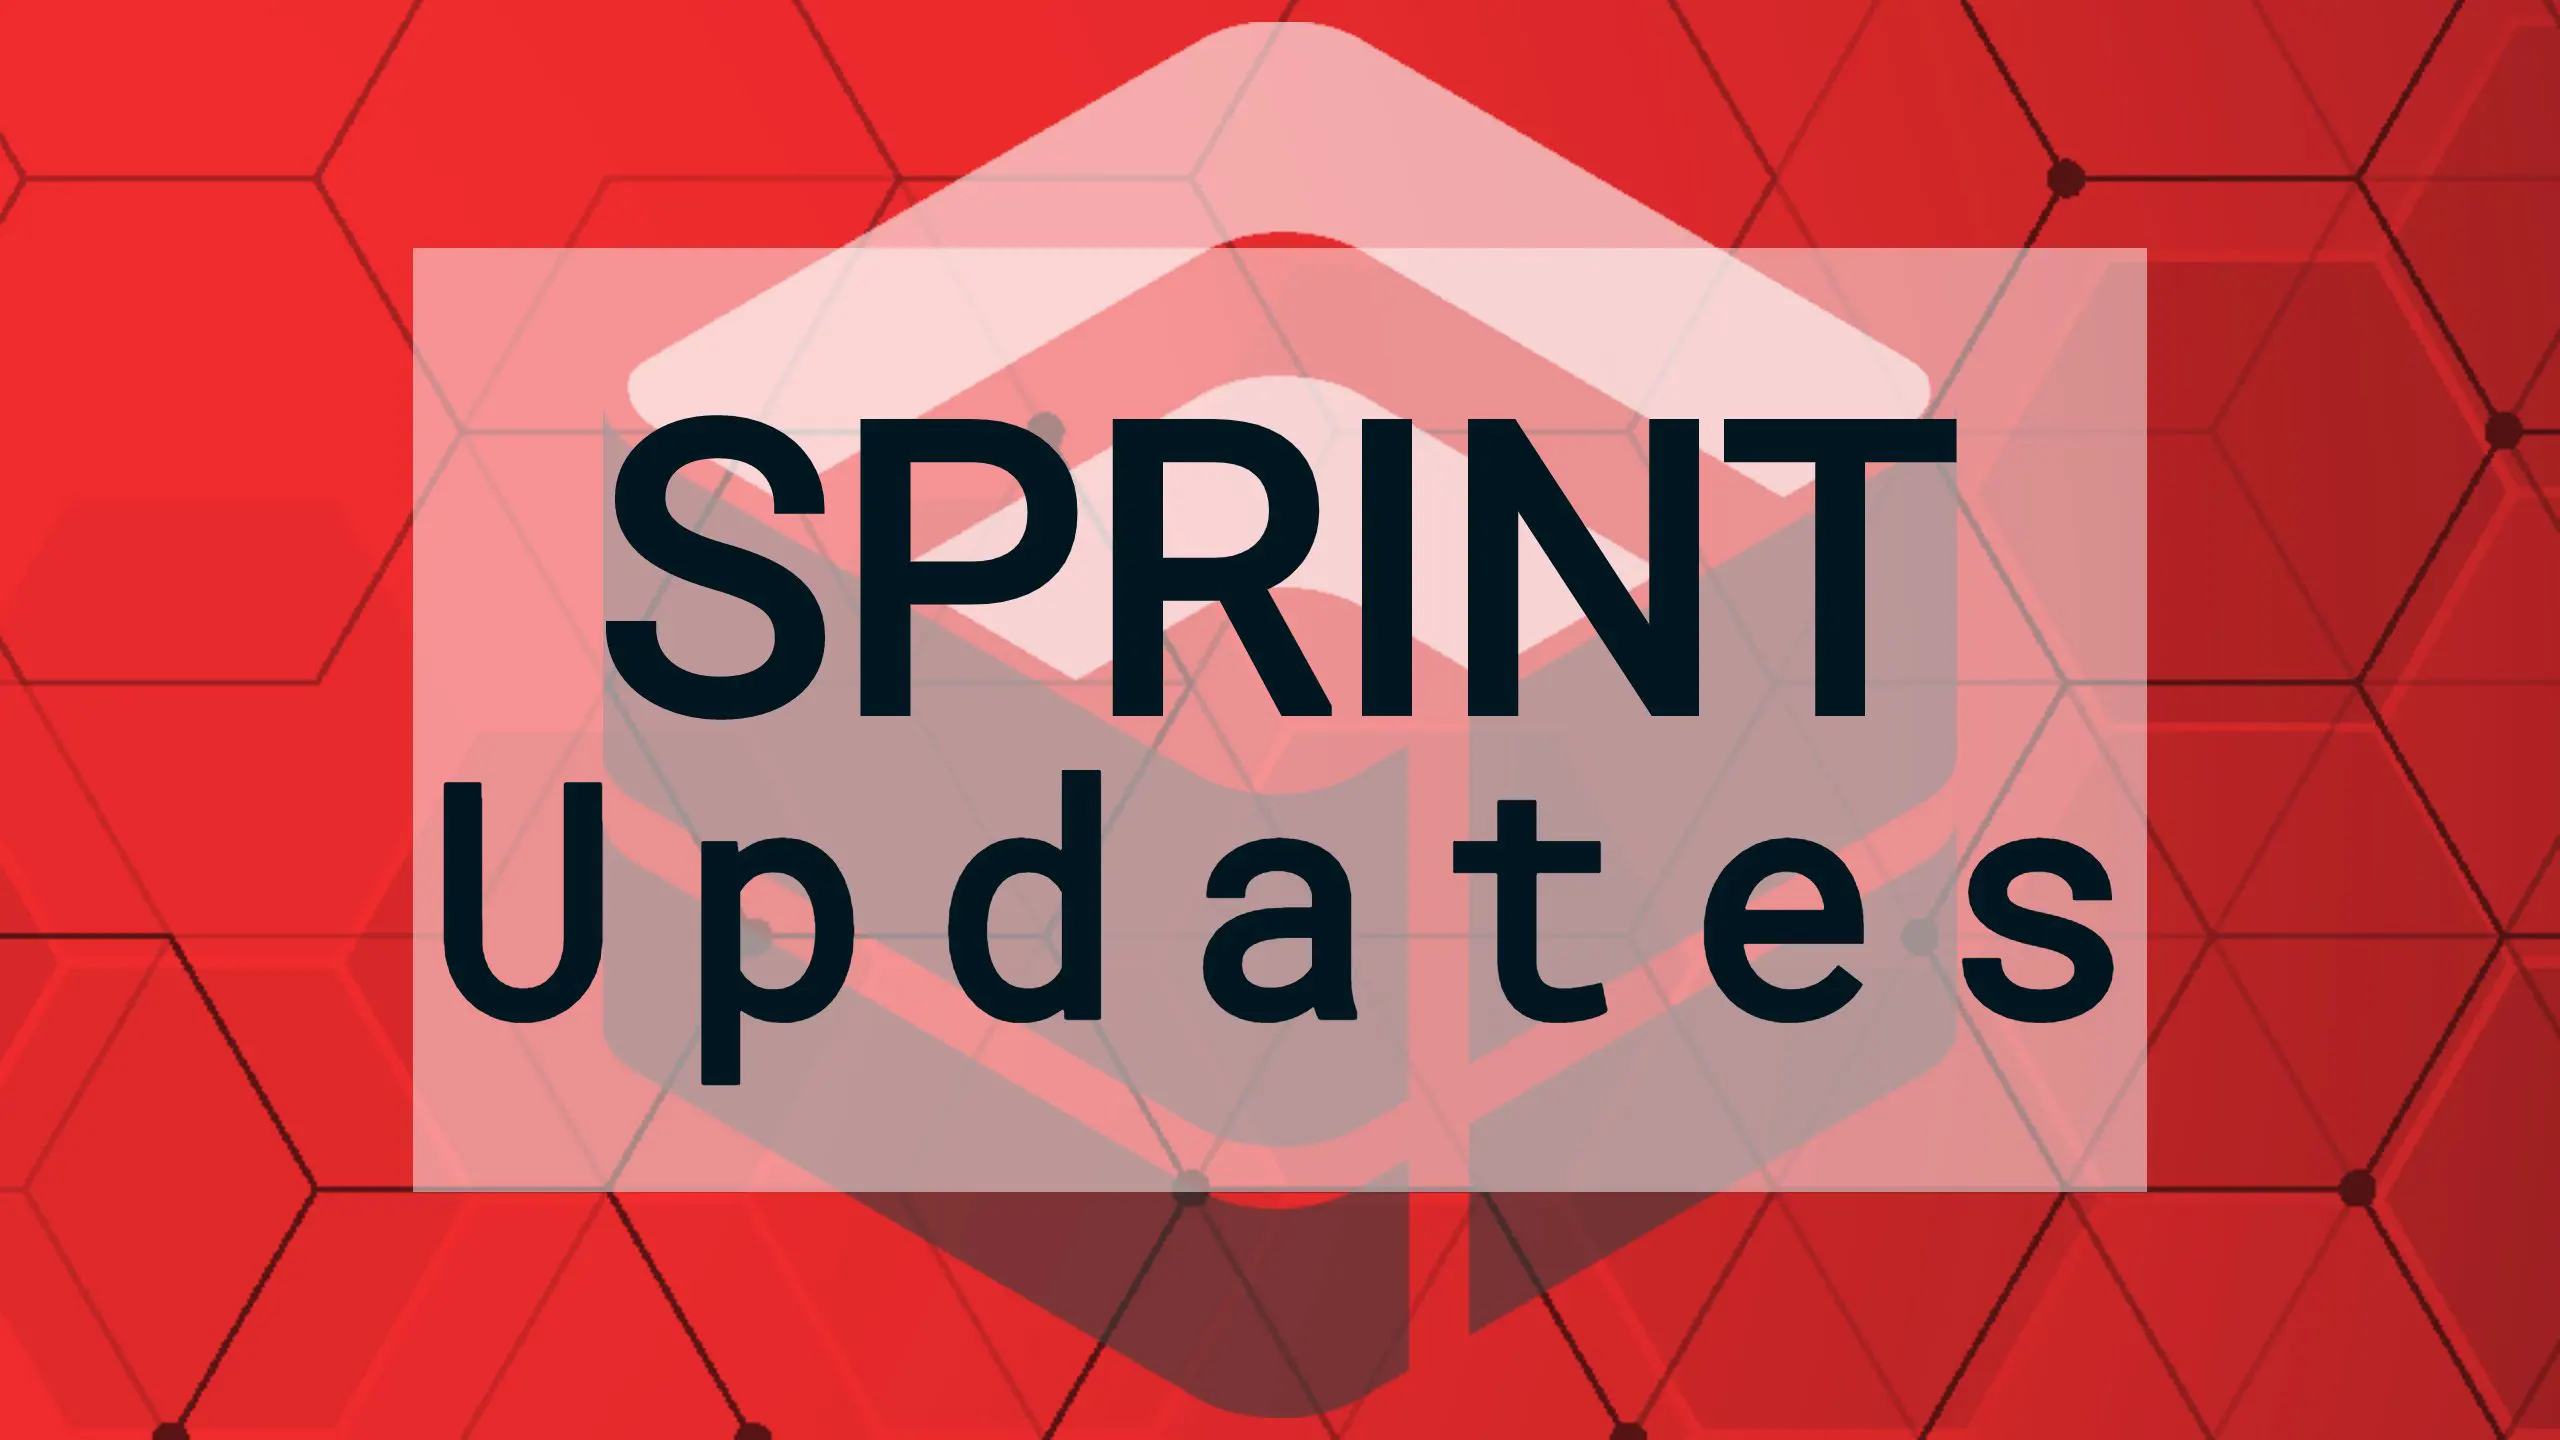 Sprint Update 3: New content publishing, branding & Portal shortcuts